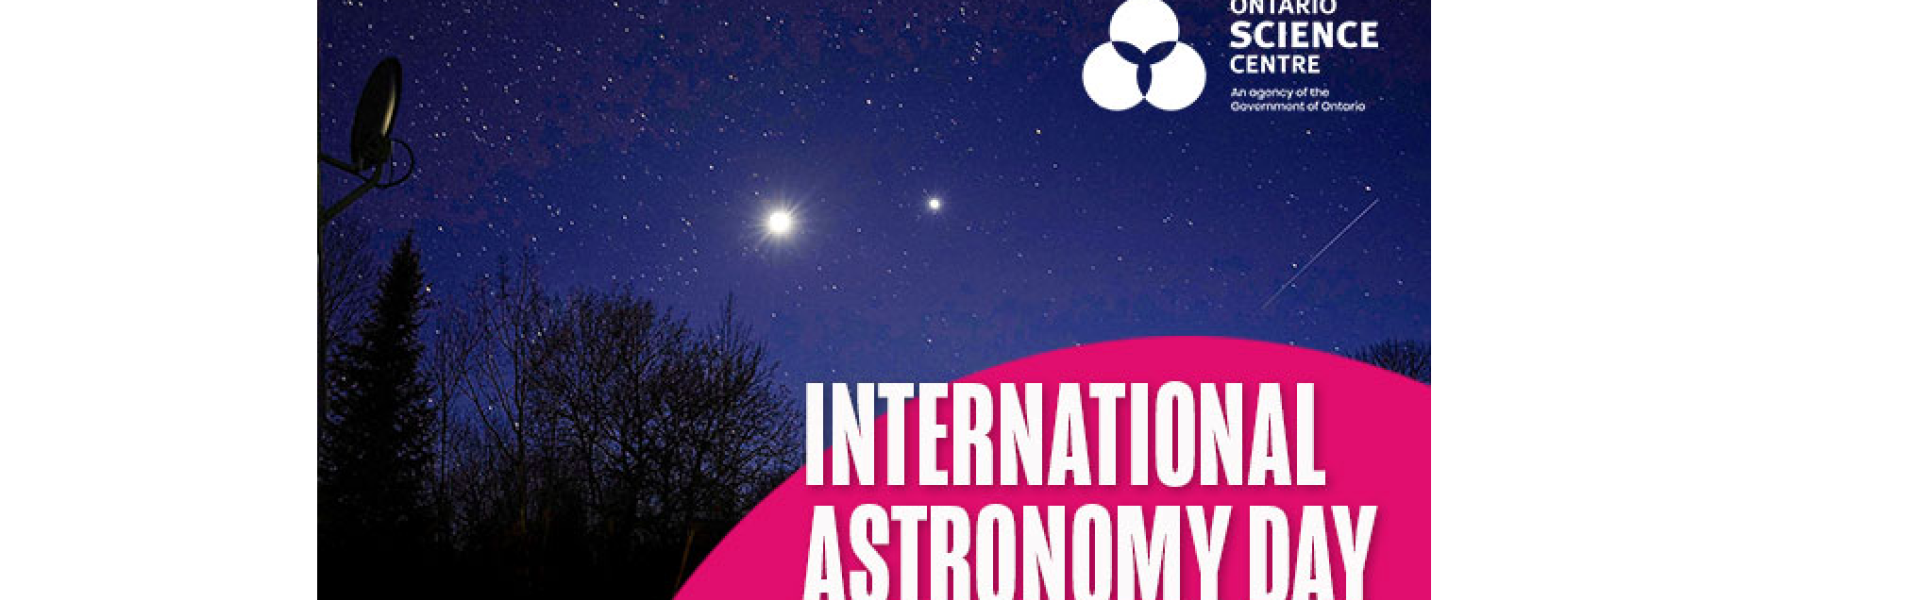 OSC - International Astronomy Day